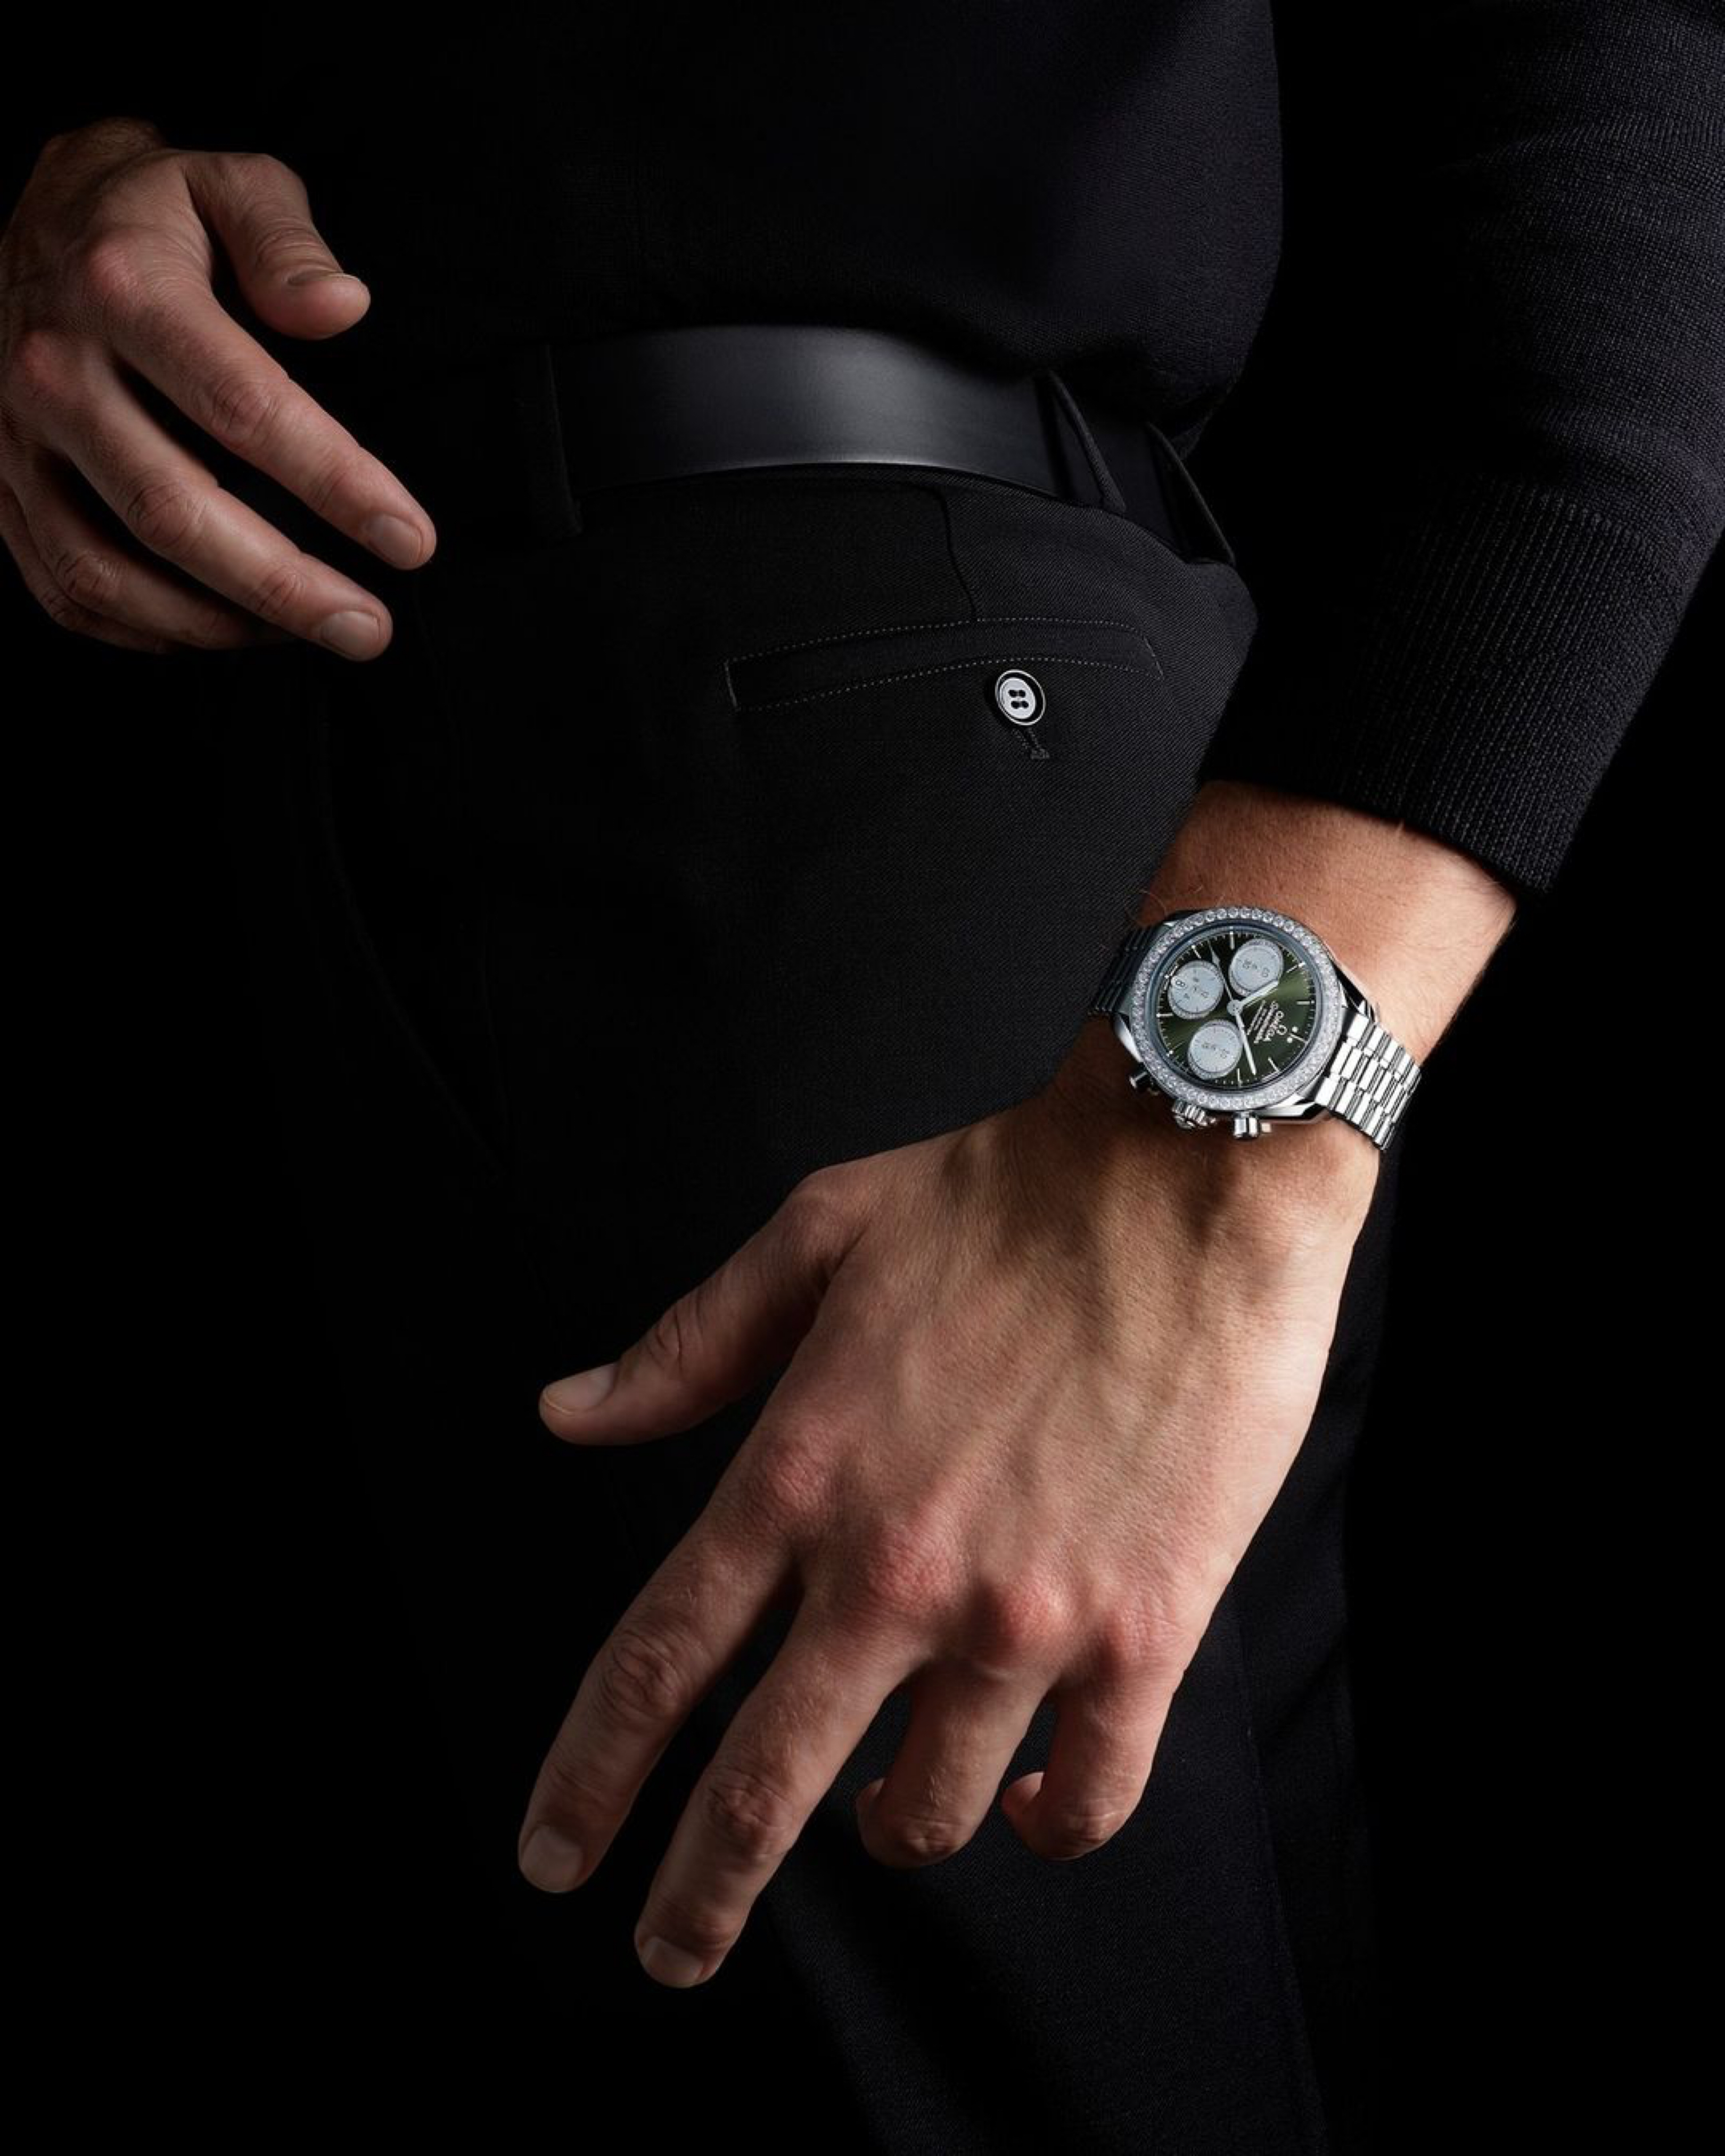 KURZ - Omega Kollektion -  Person mit einer Omega Seamaster Armbanduhr am Handgelenk.